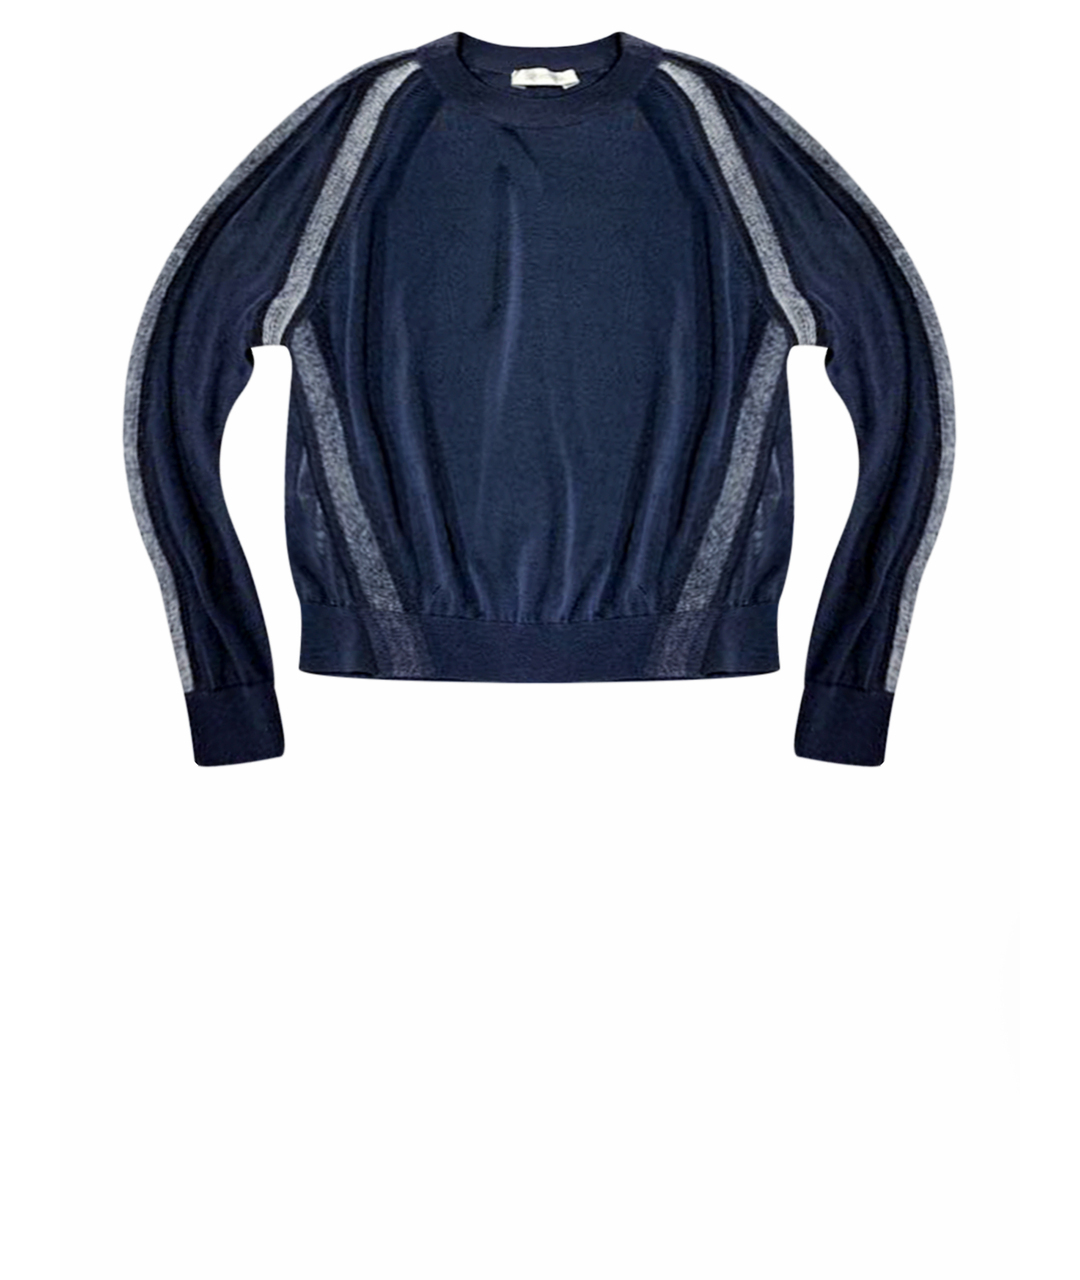 SPORTMAX Синий вискозный джемпер / свитер, фото 1